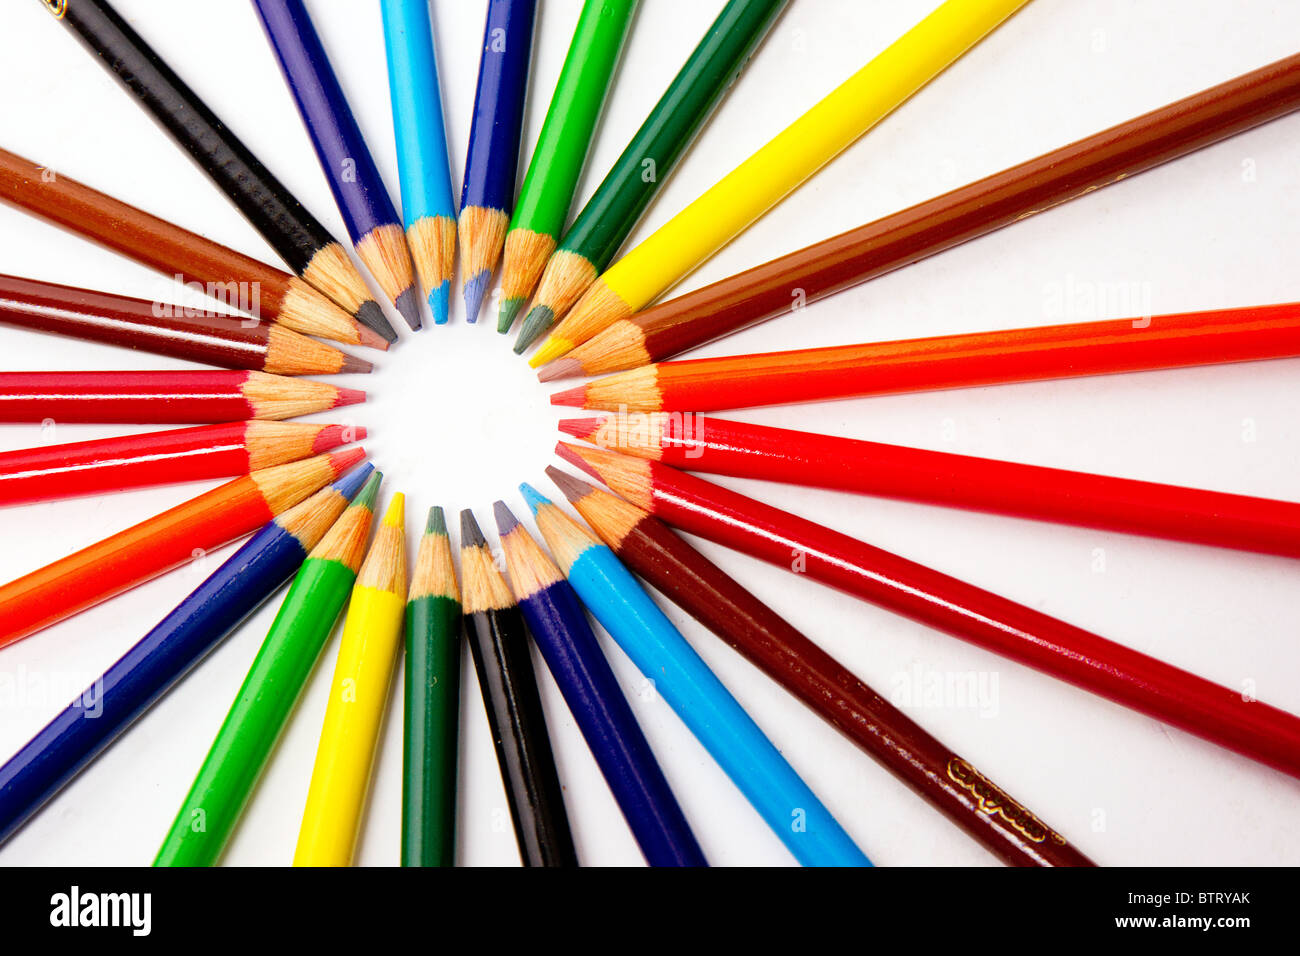 https://c8.alamy.com/comp/BTRYAK/pile-of-colored-pencils-for-art-projects-BTRYAK.jpg